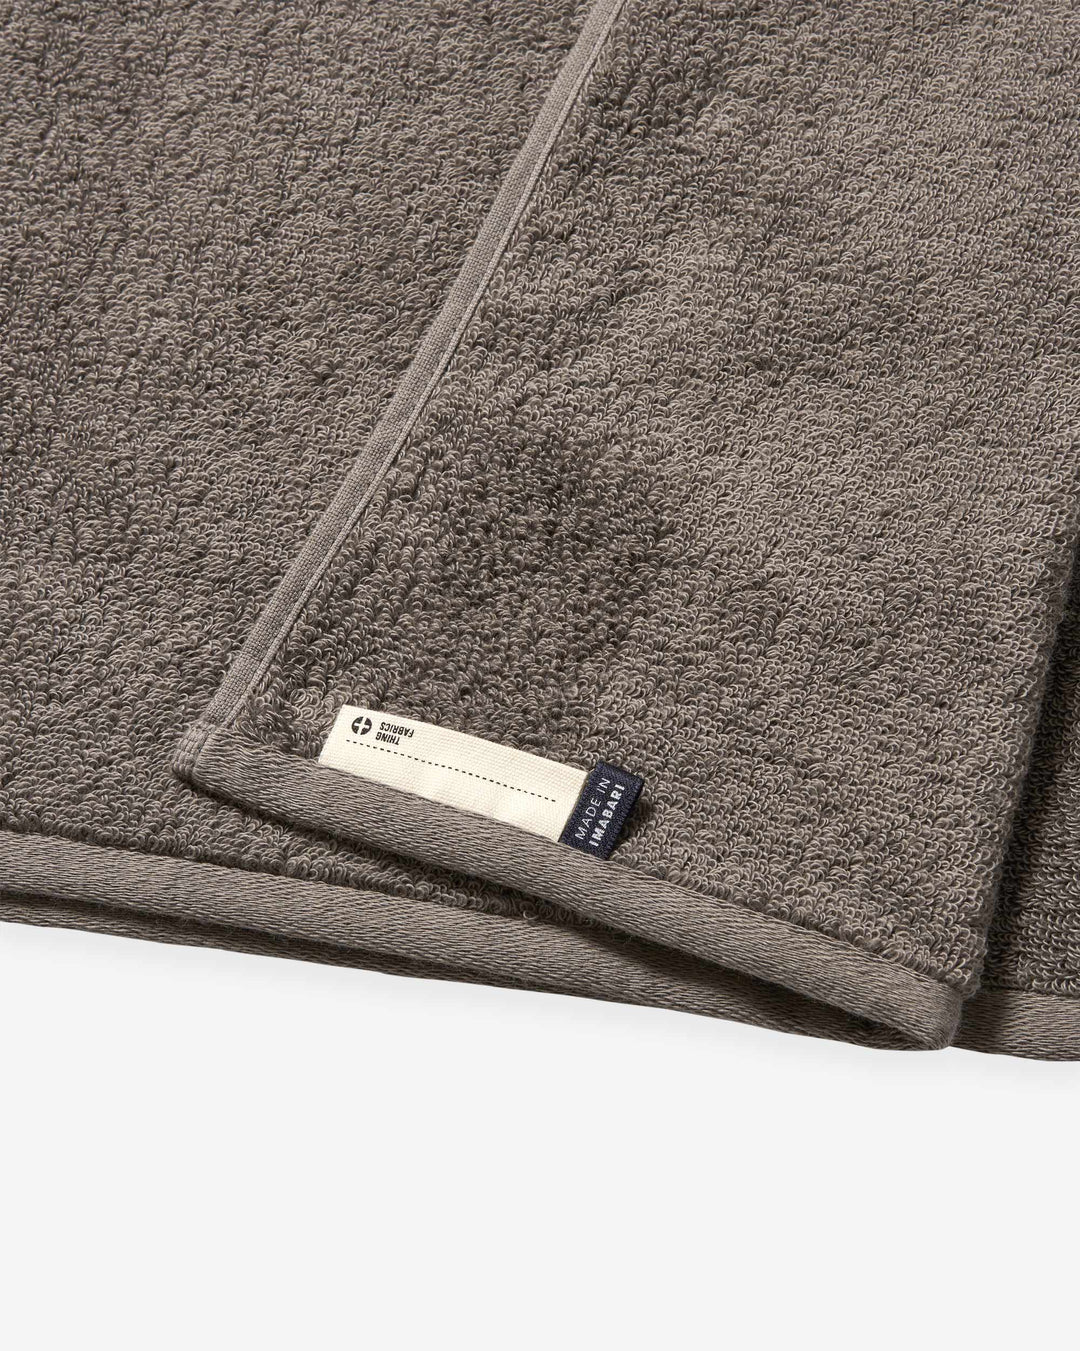 TIP TOP 365 Bath Towel - Grey